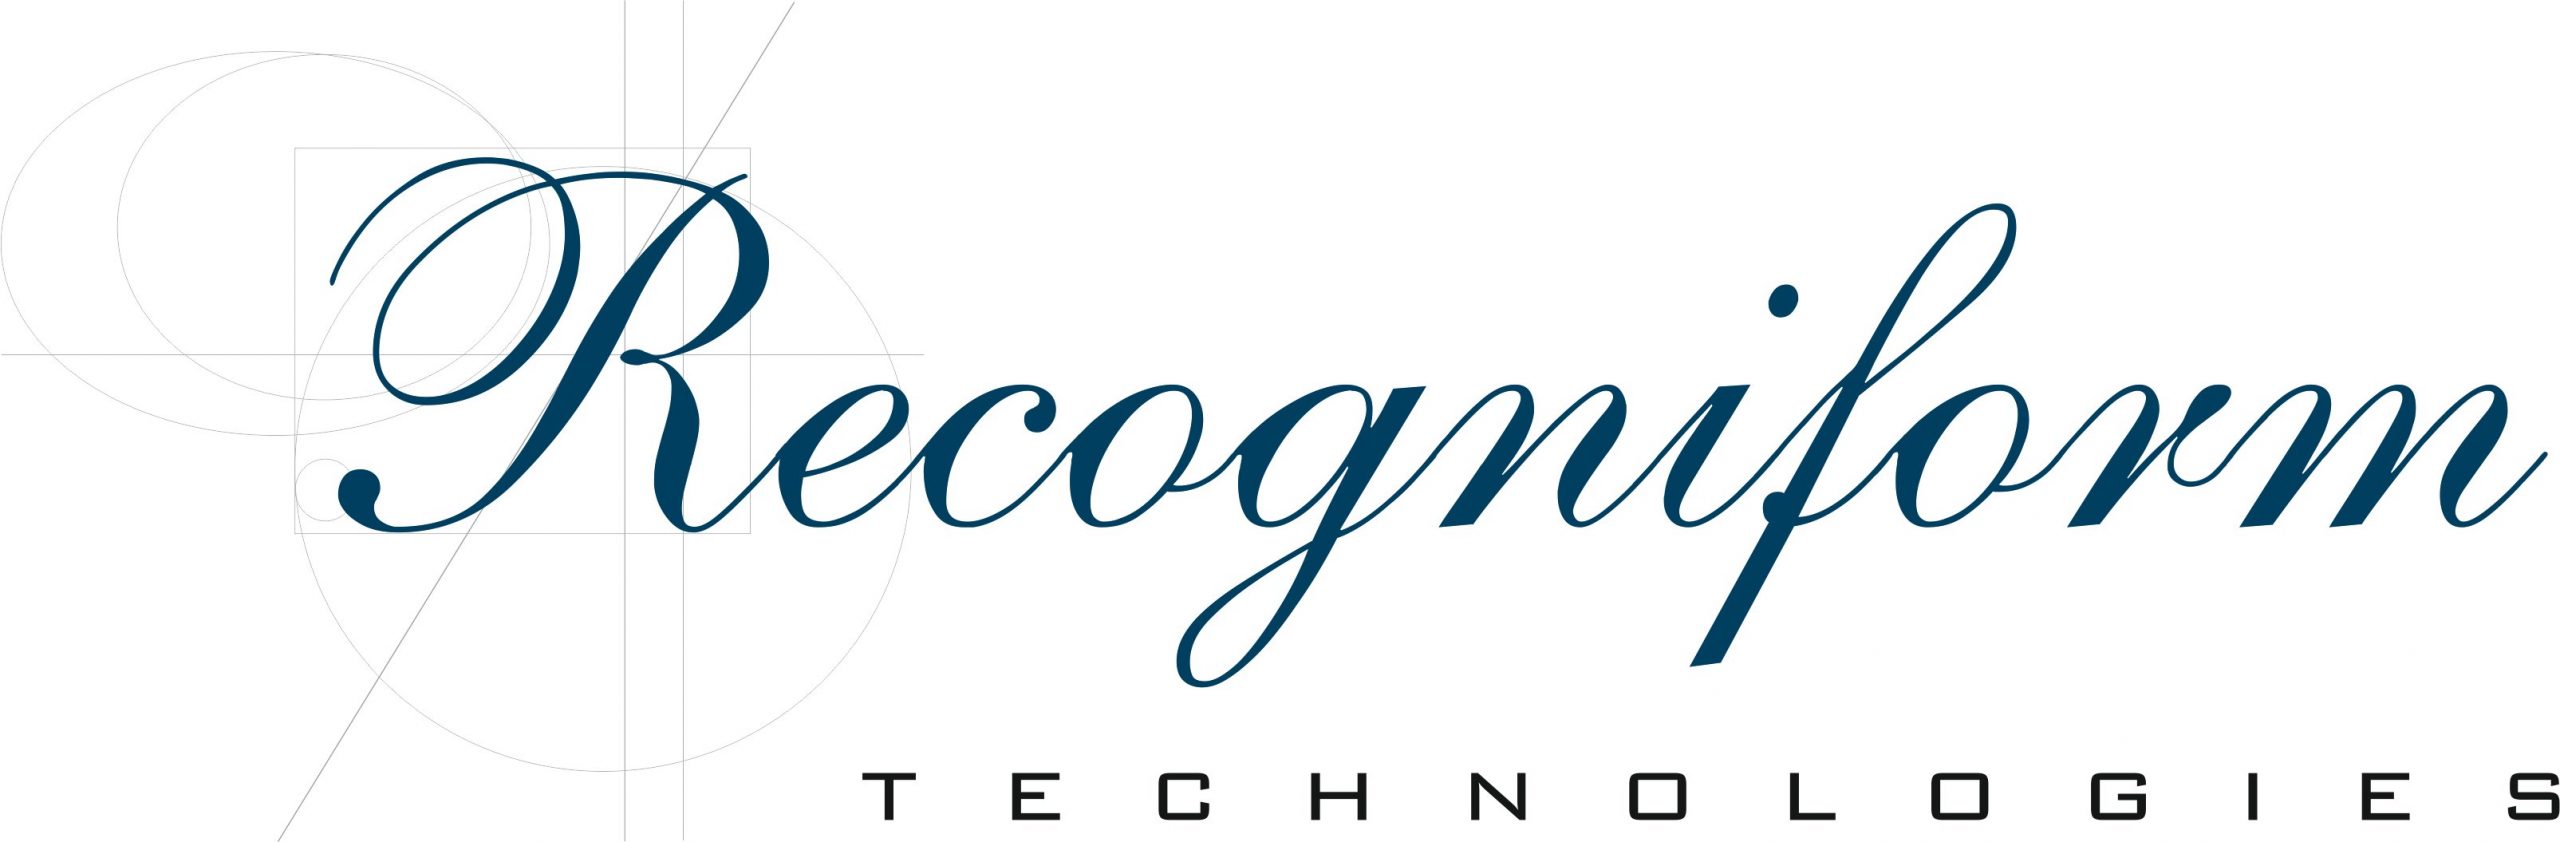 Recogniform Technologies